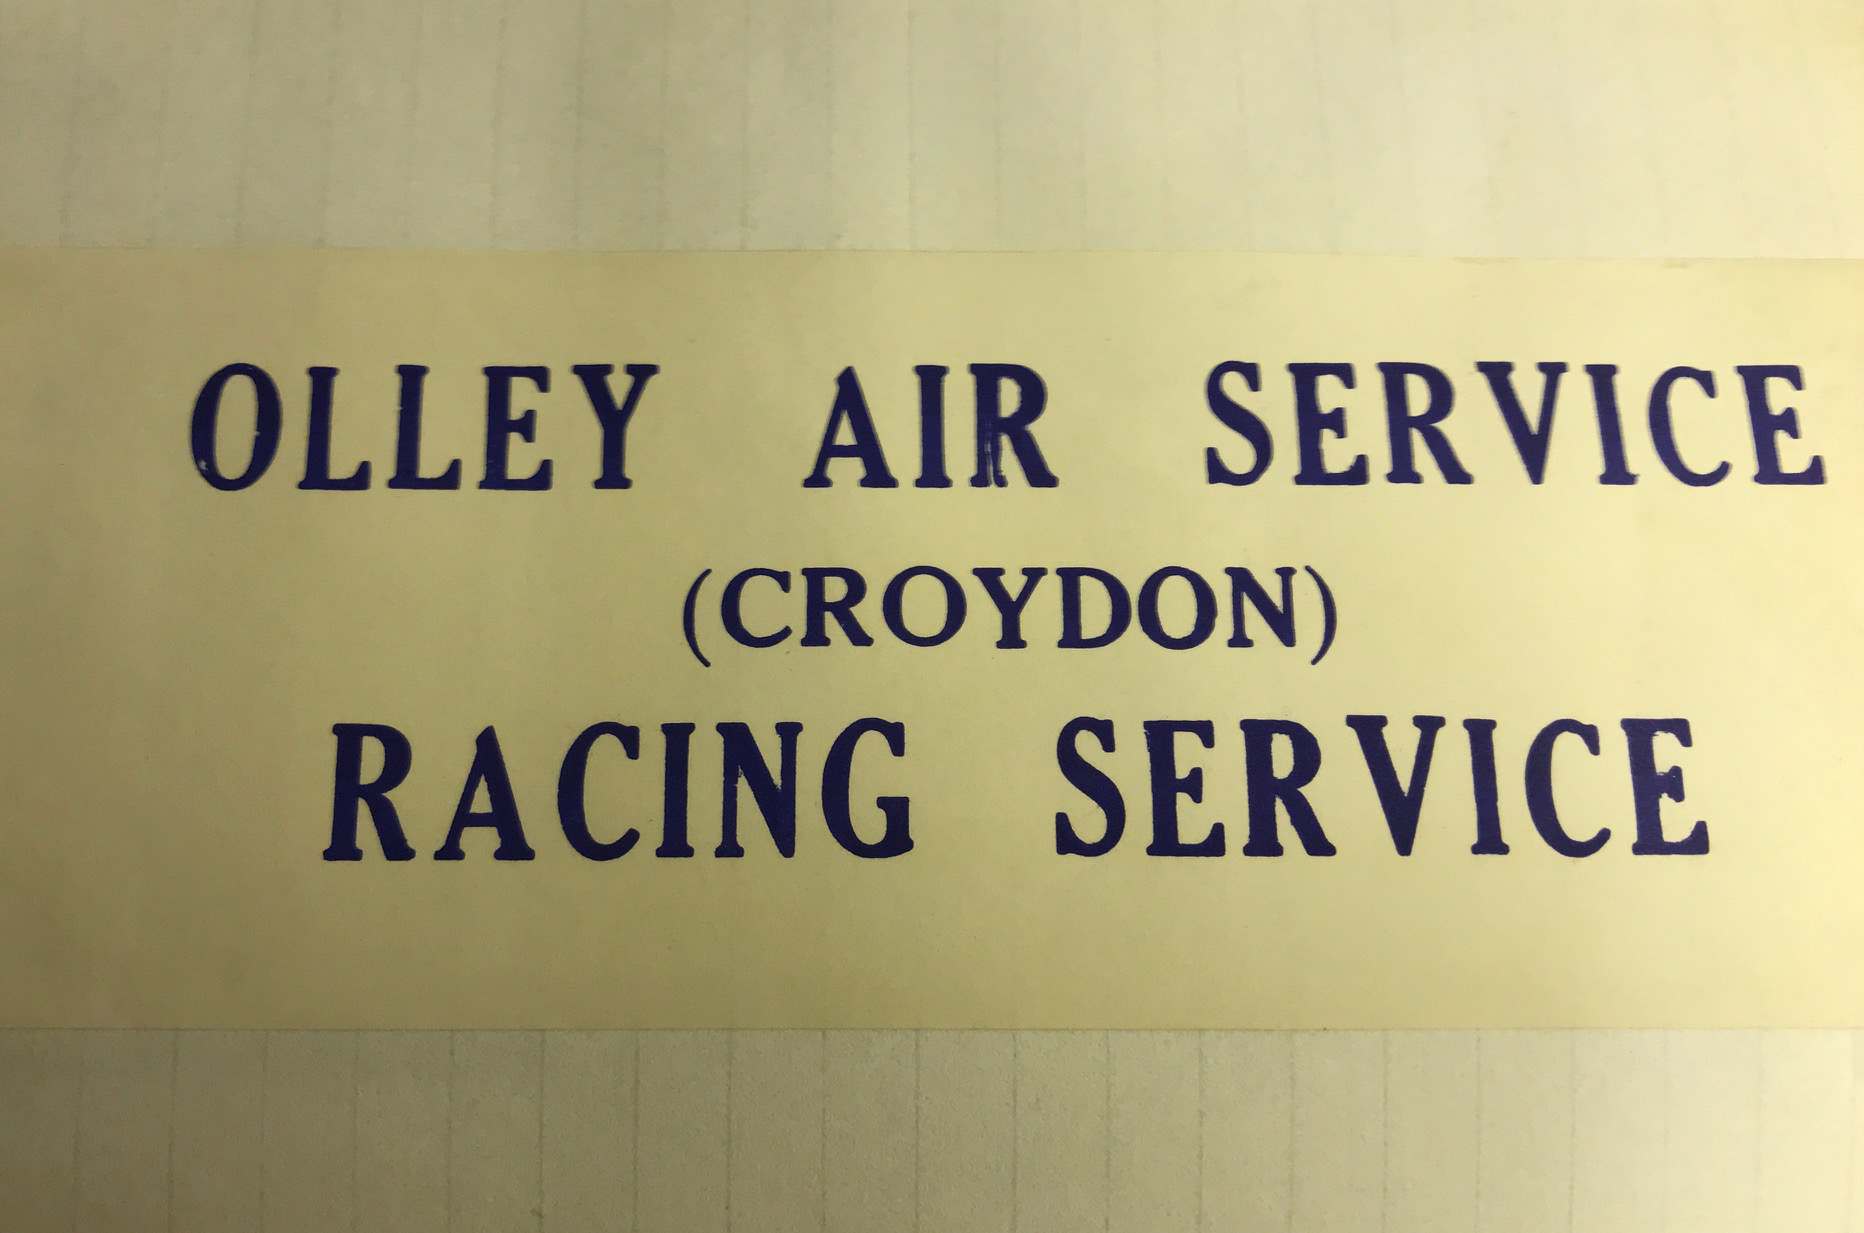 Croydon Airport: Olley Air Service - Racing Service.